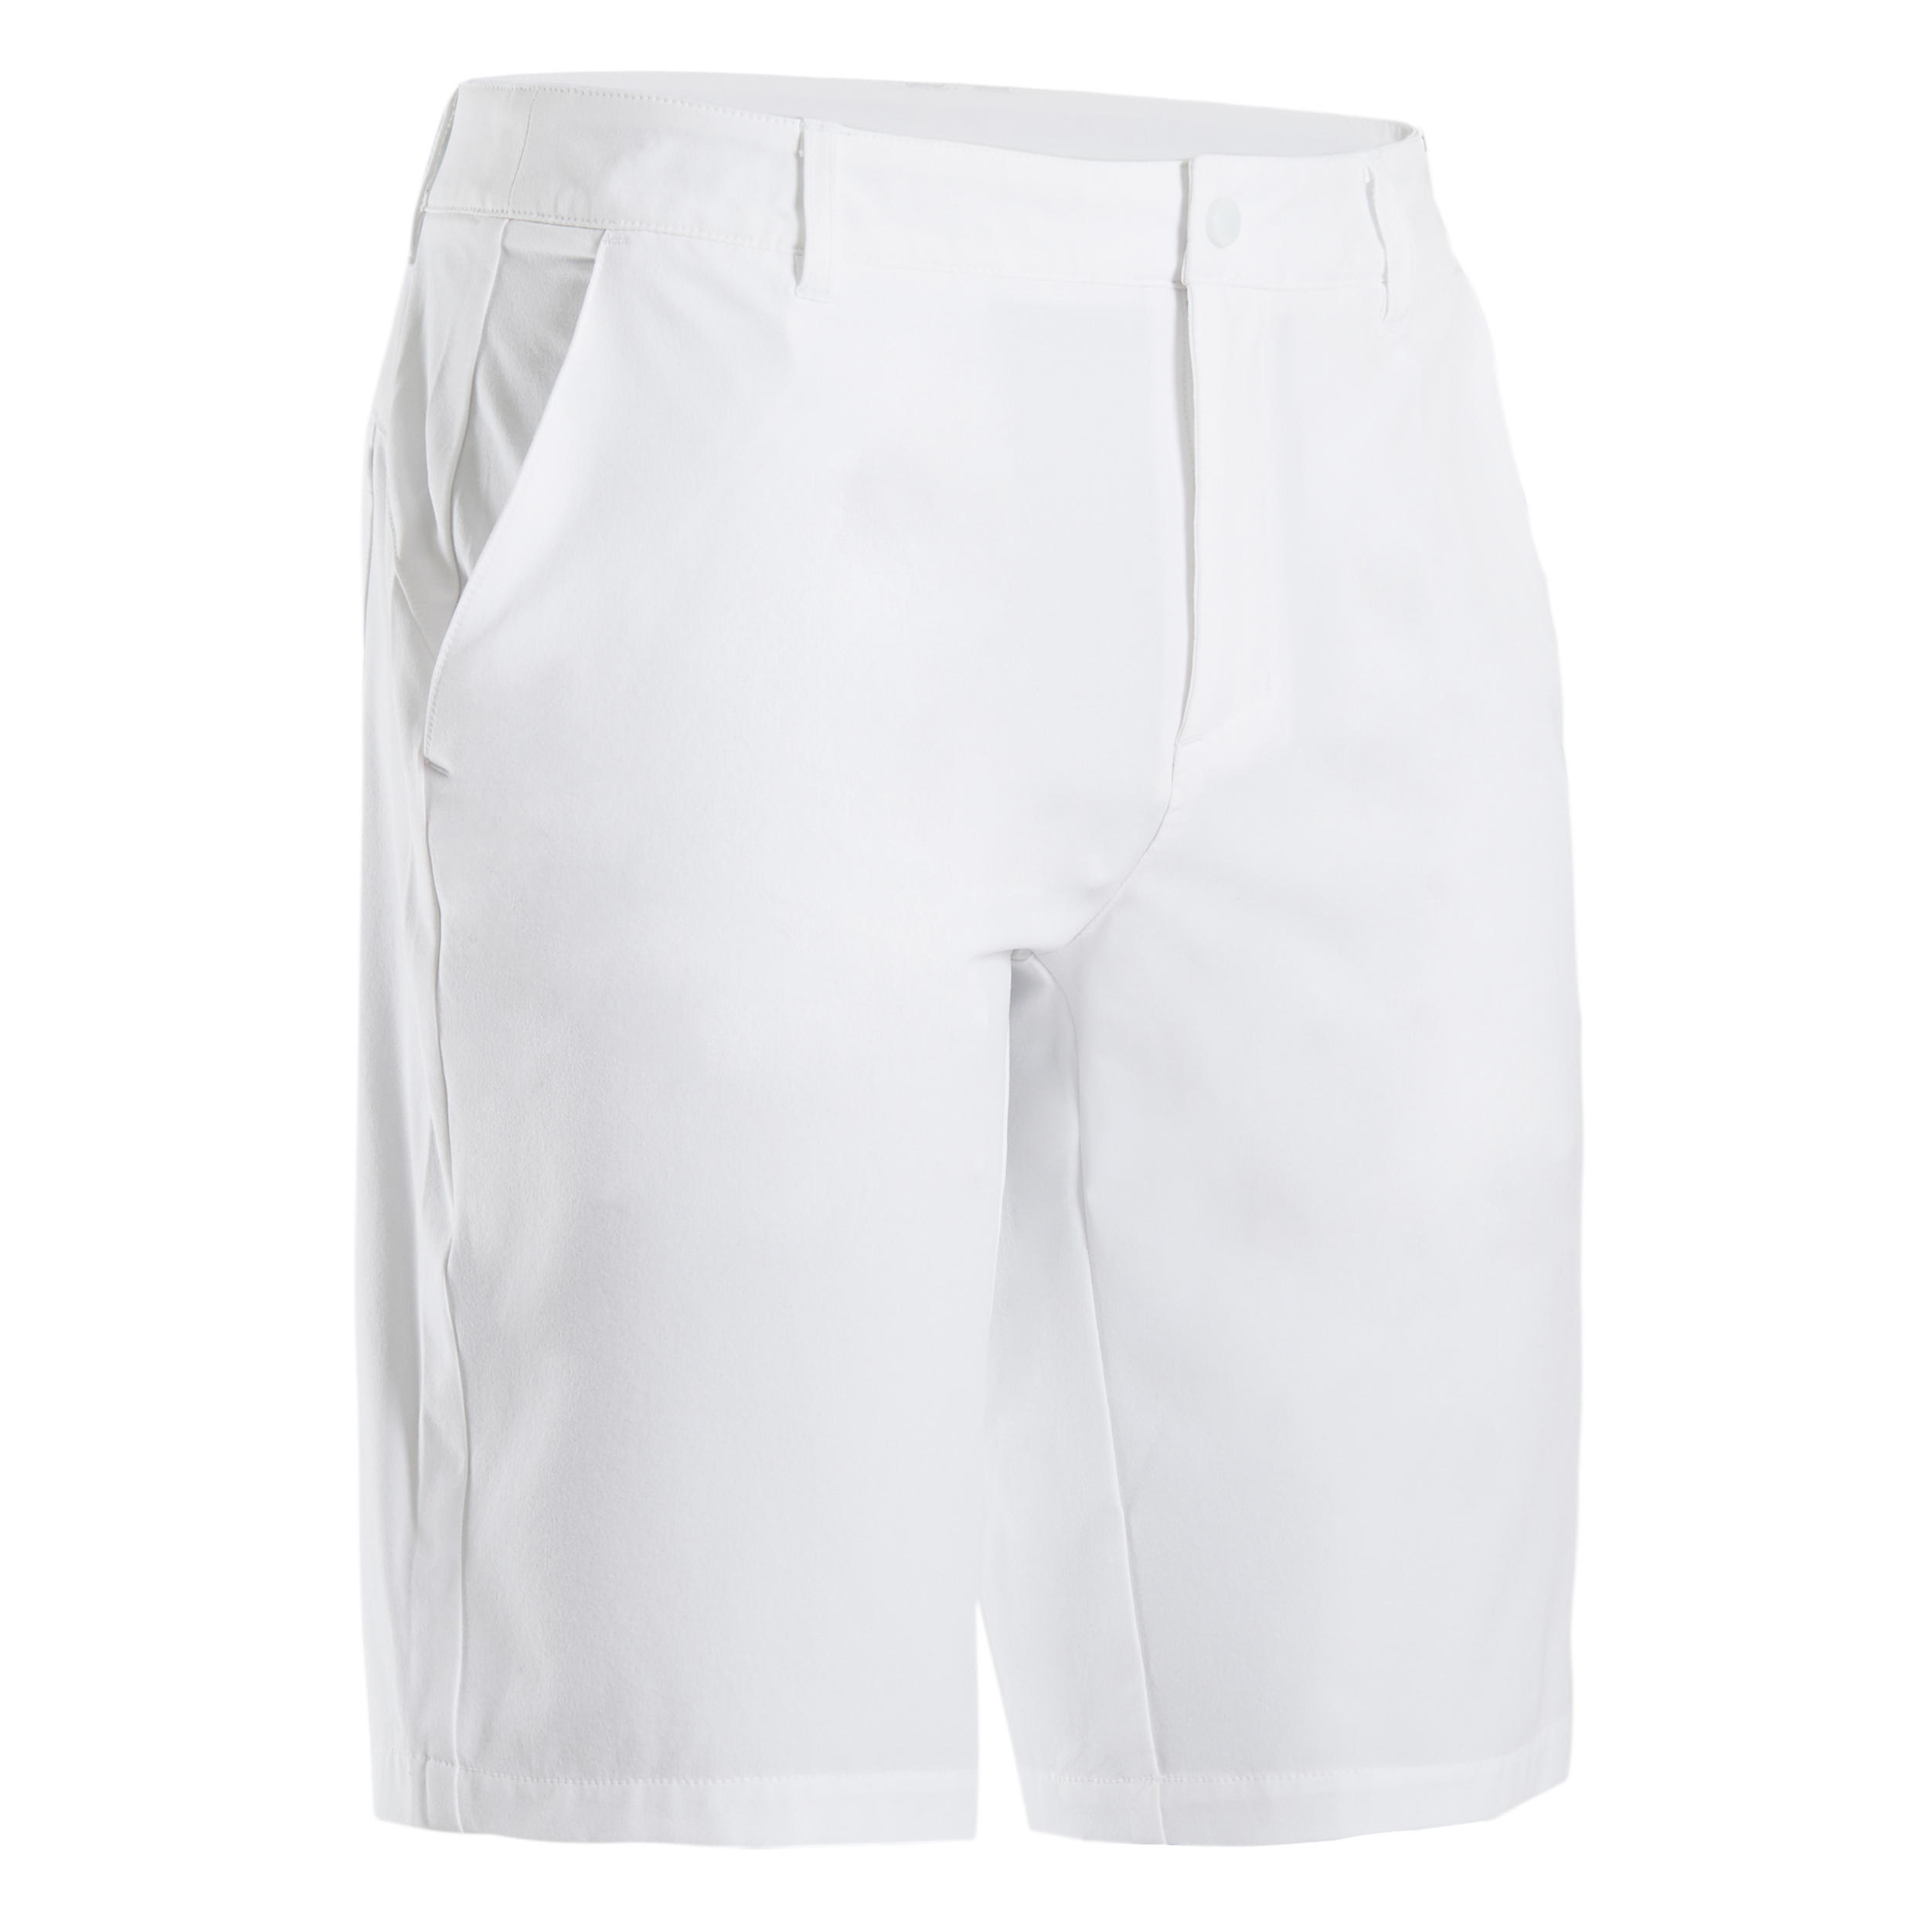 Golf Shorts, Golf Skirts | Men's 